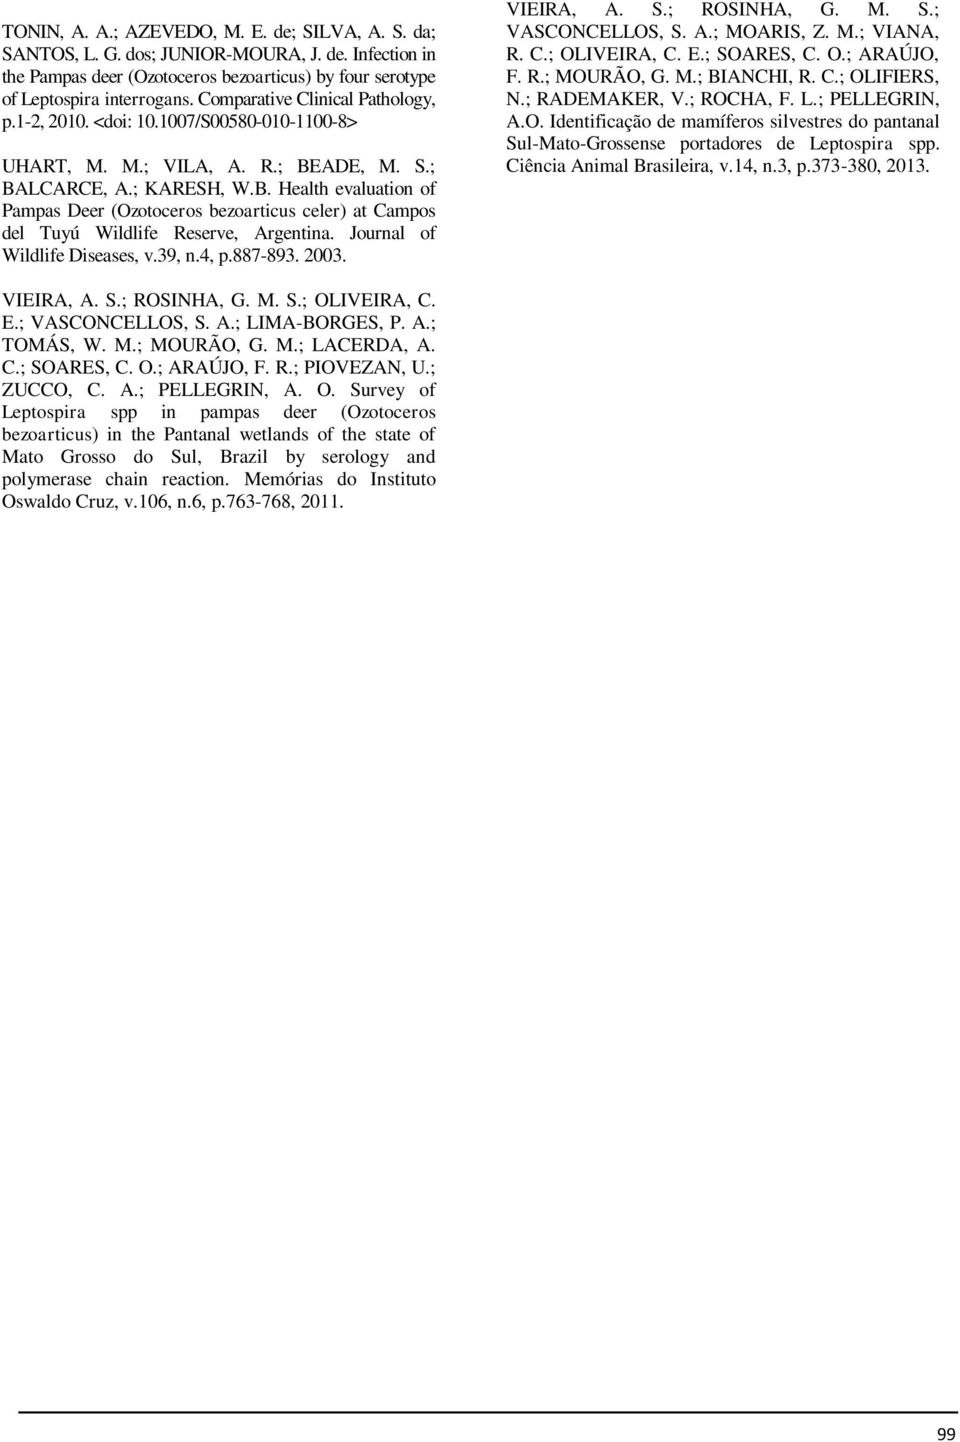 ADE, M. S.; BALCARCE, A.; KARESH, W.B. Health evaluation of Pampas Deer (Ozotoceros bezoarticus celer) at Campos del Tuyú Wildlife Reserve, Argentina. Journal of Wildlife Diseases, v.39, n.4, p.